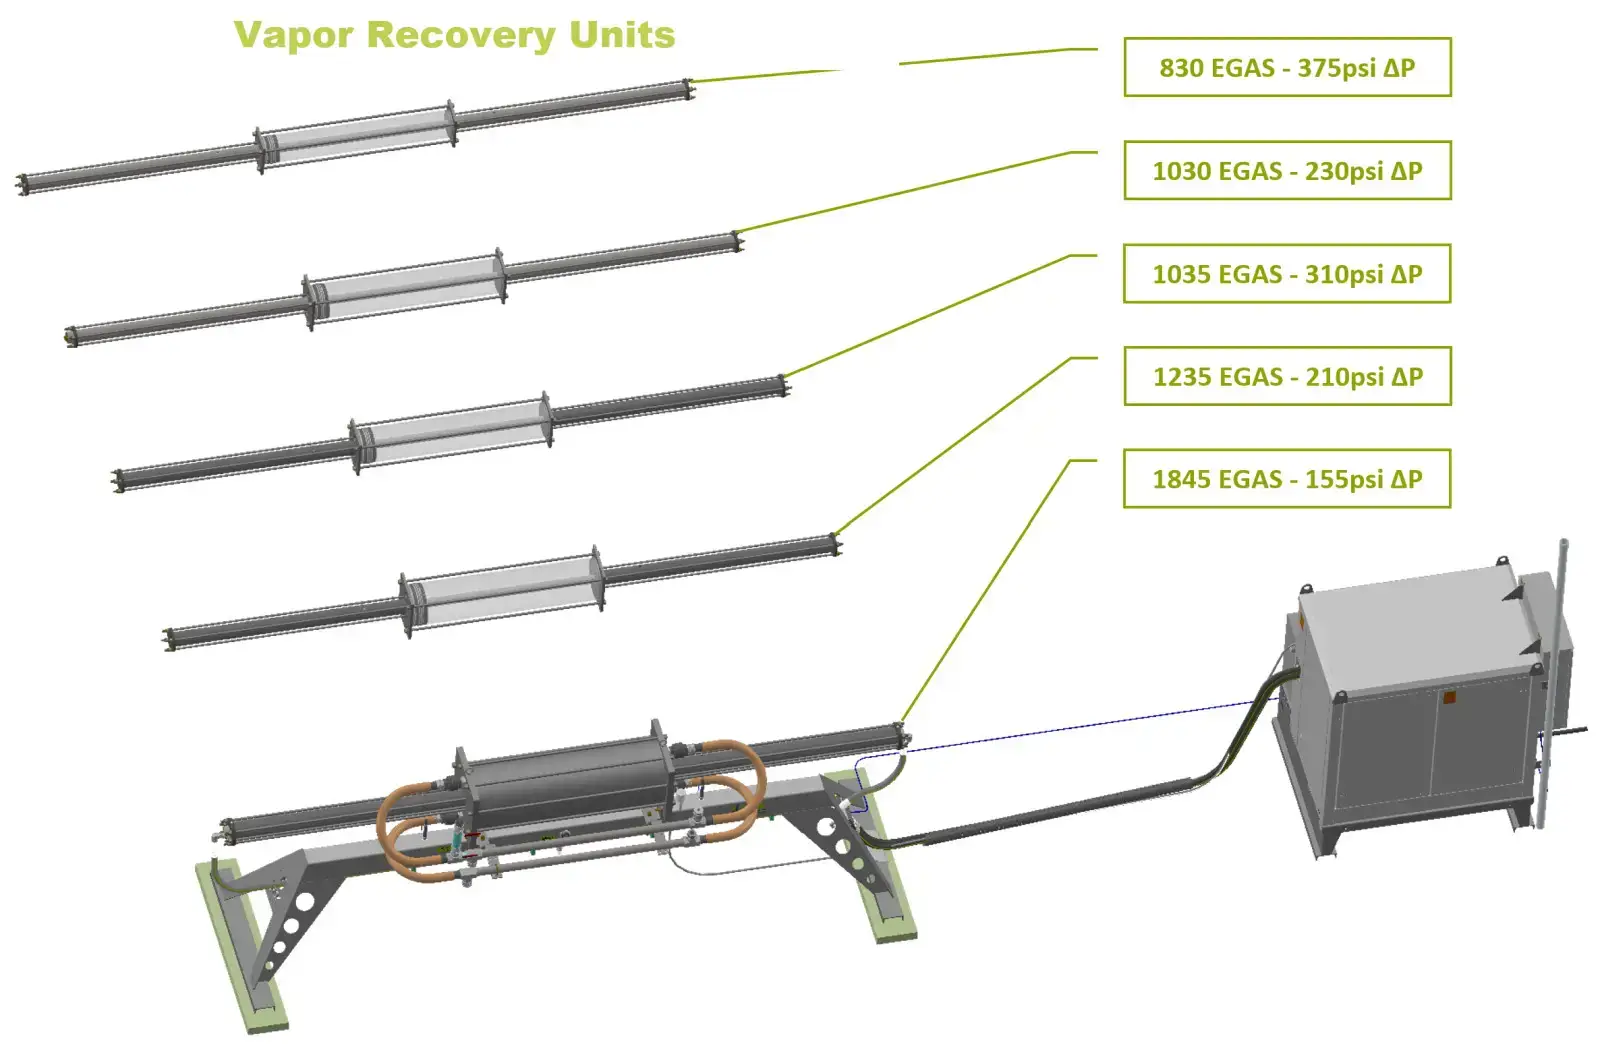 IJACK VRU vapour recovery unit sizes